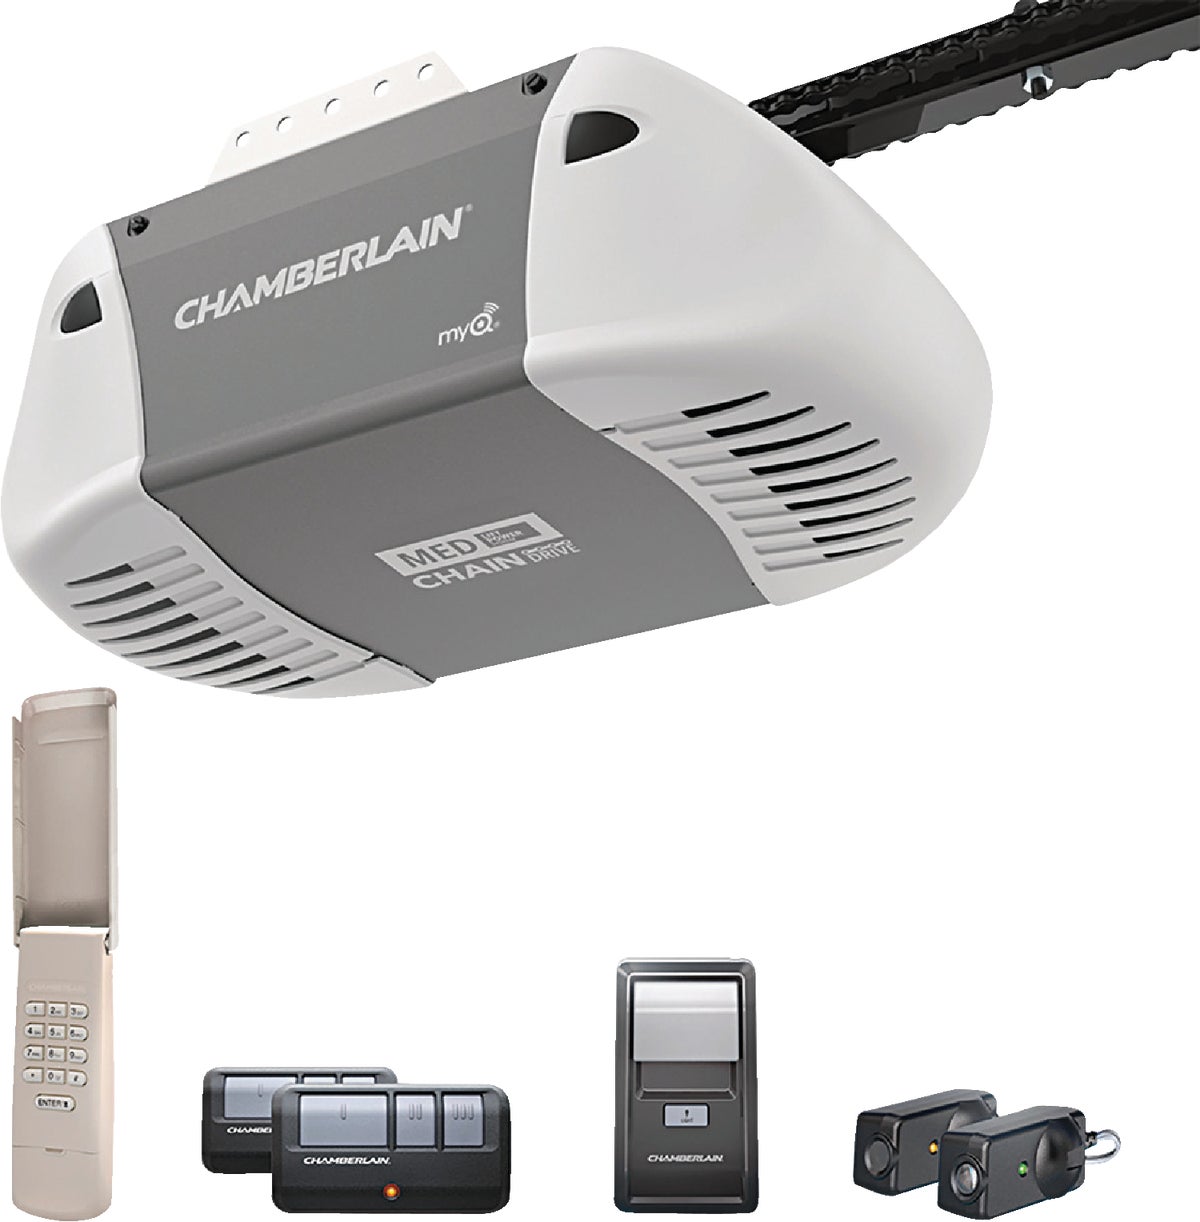 CHAMBERLAIN C2102 Chain Drive Garage Door Opener with Wireless Remote Contr - 1